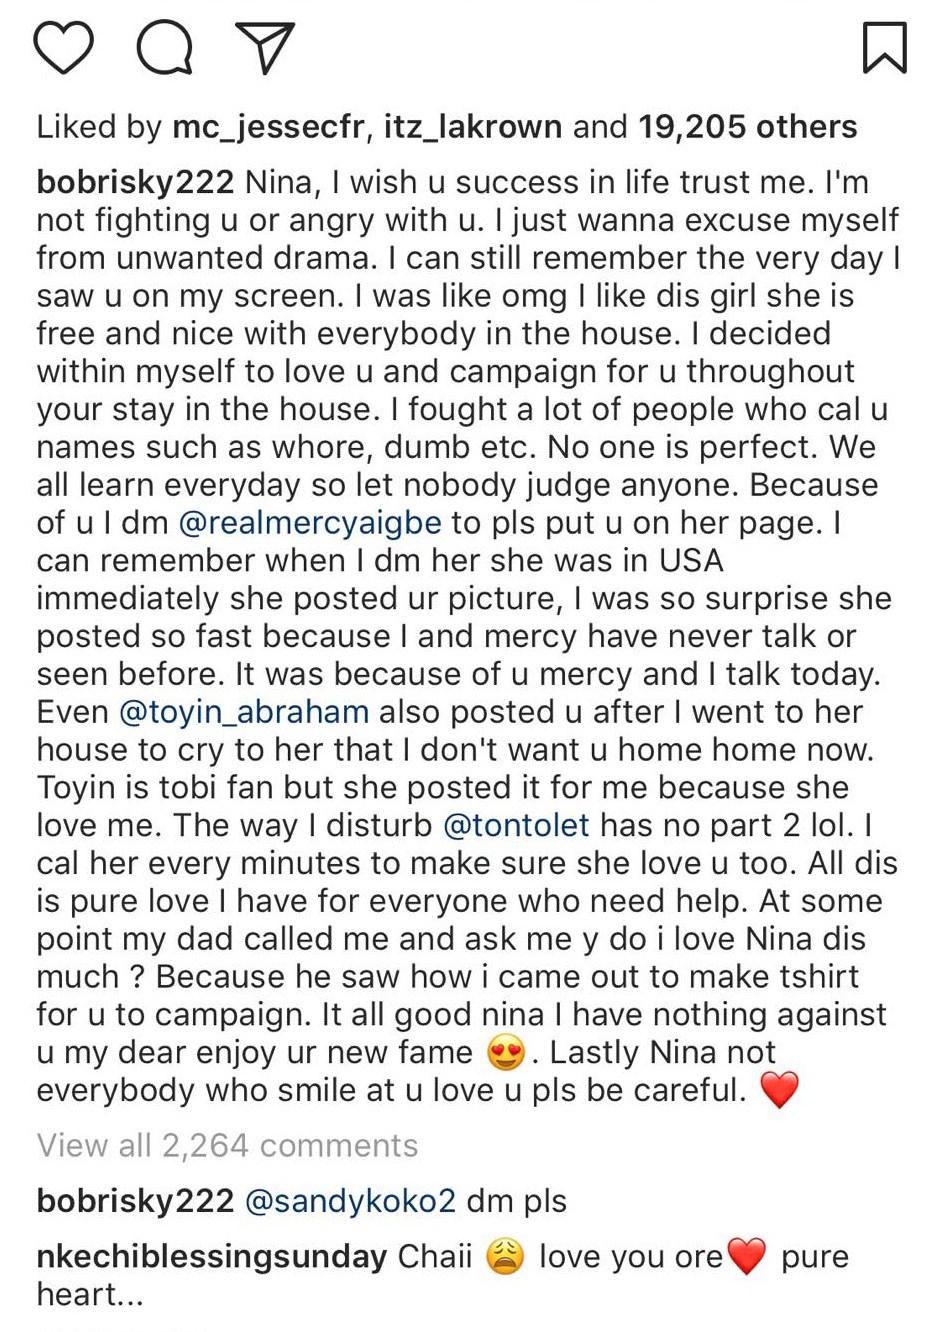 'I have nothing against you, enjoy your new fame' - Bobrisky accepts Nina's apology